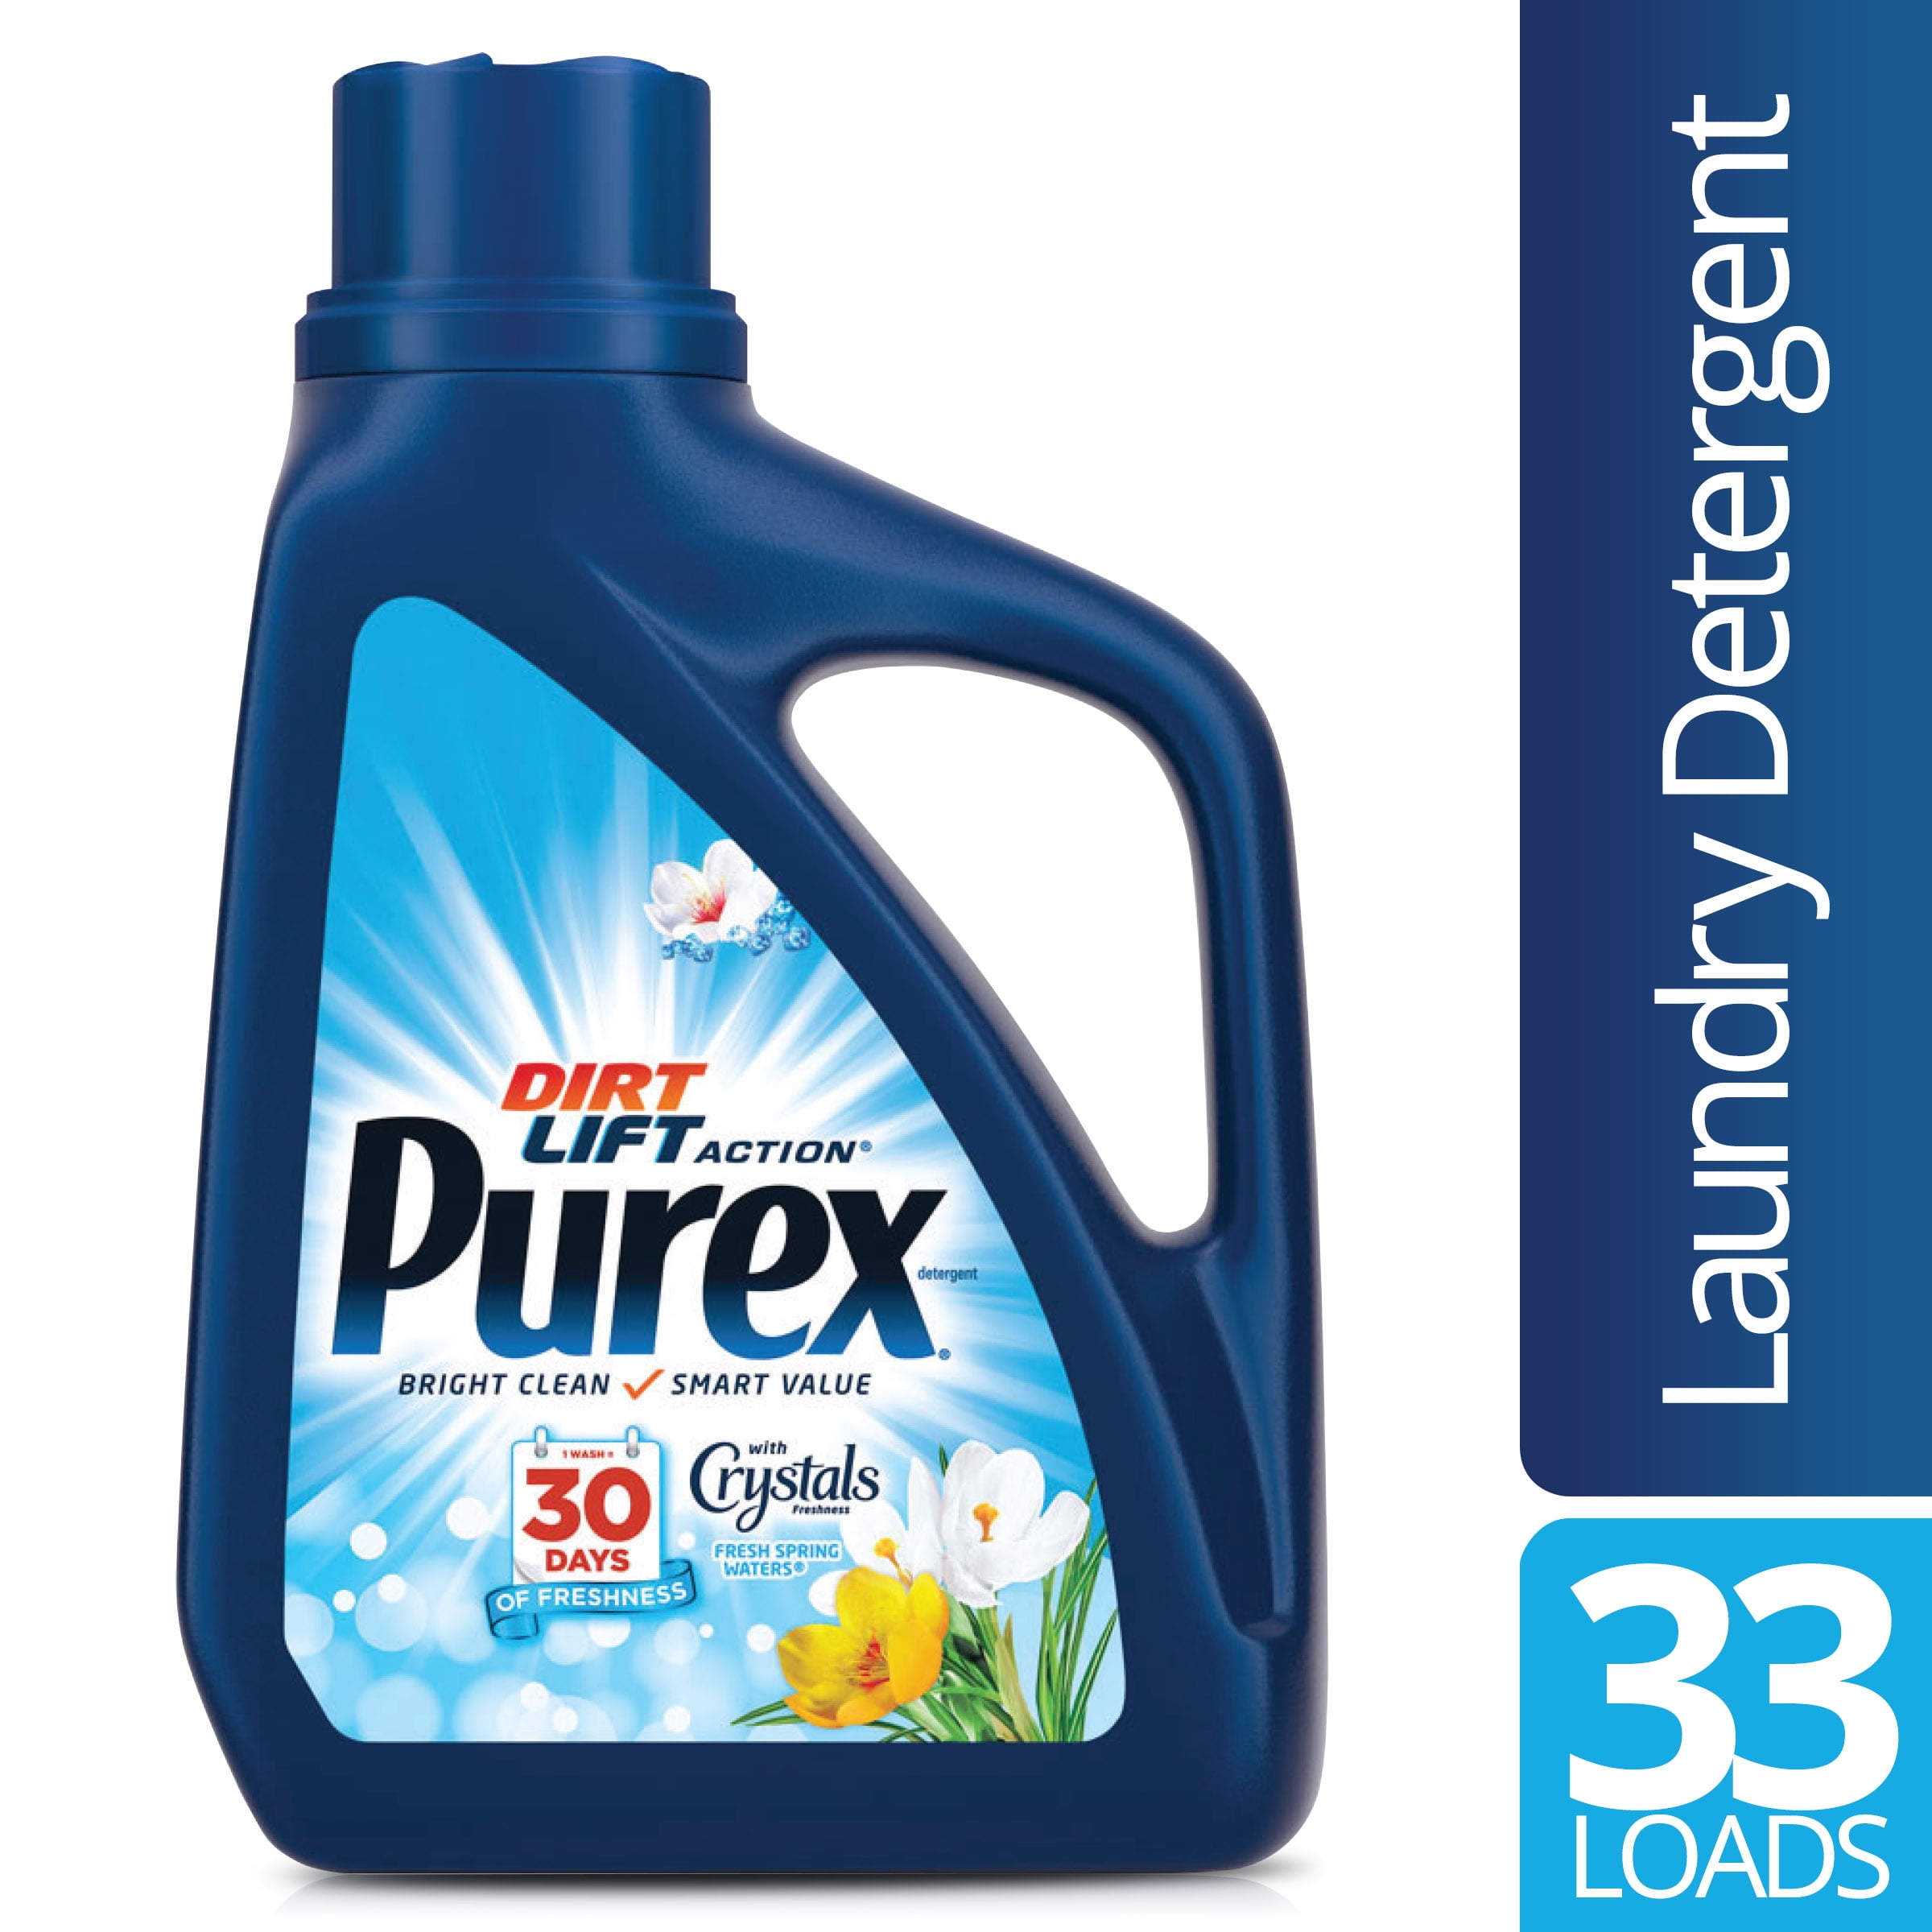 purex price